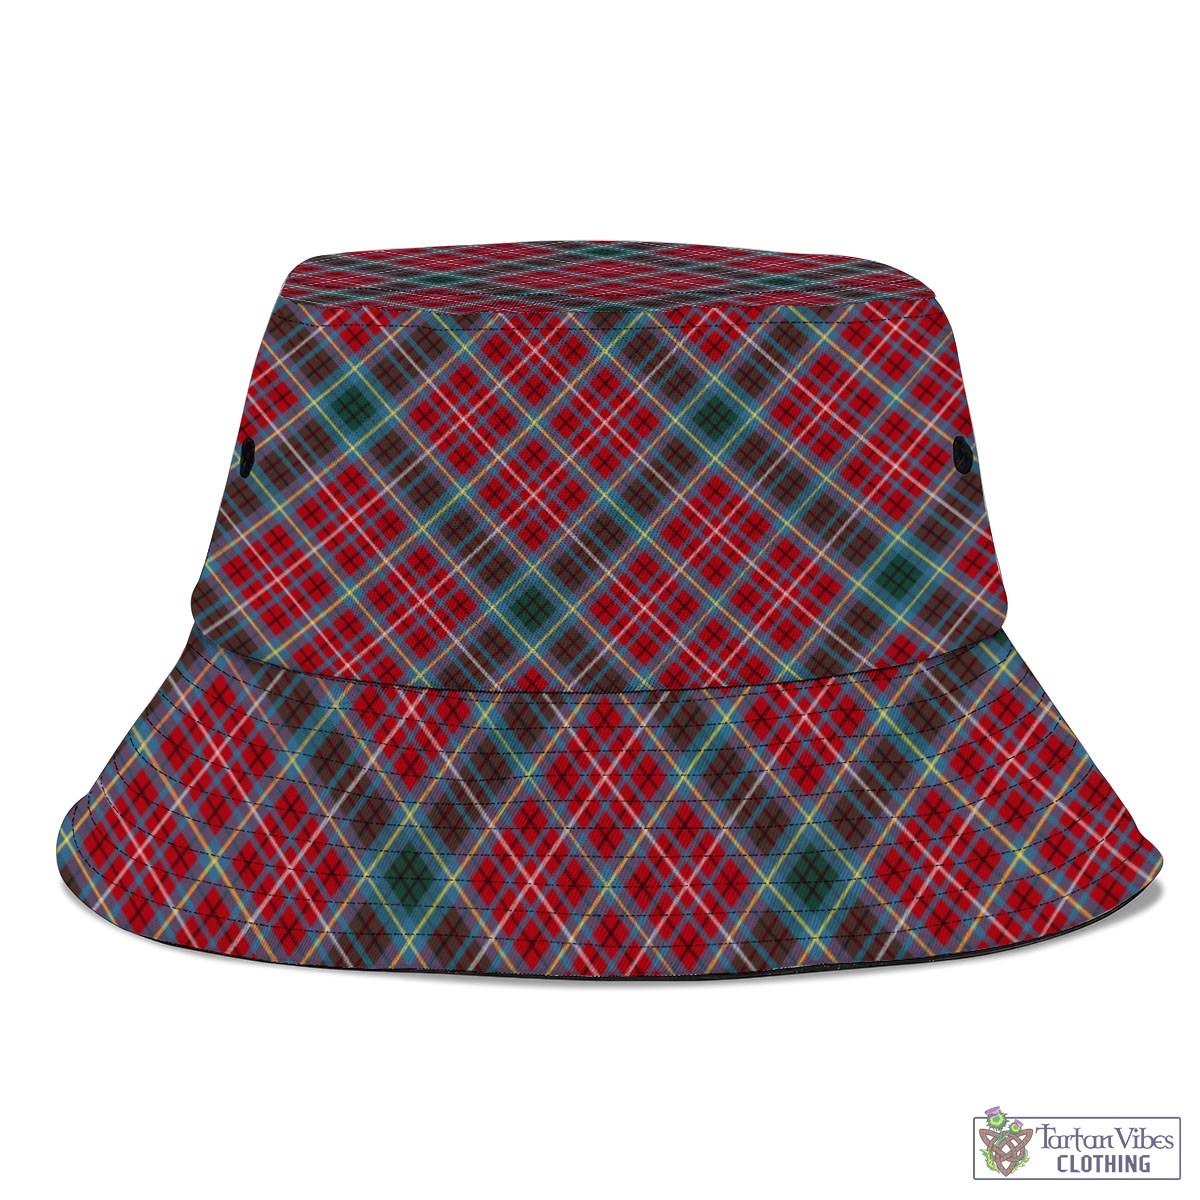 Tartan Vibes Clothing British Columbia Province Canada Tartan Bucket Hat